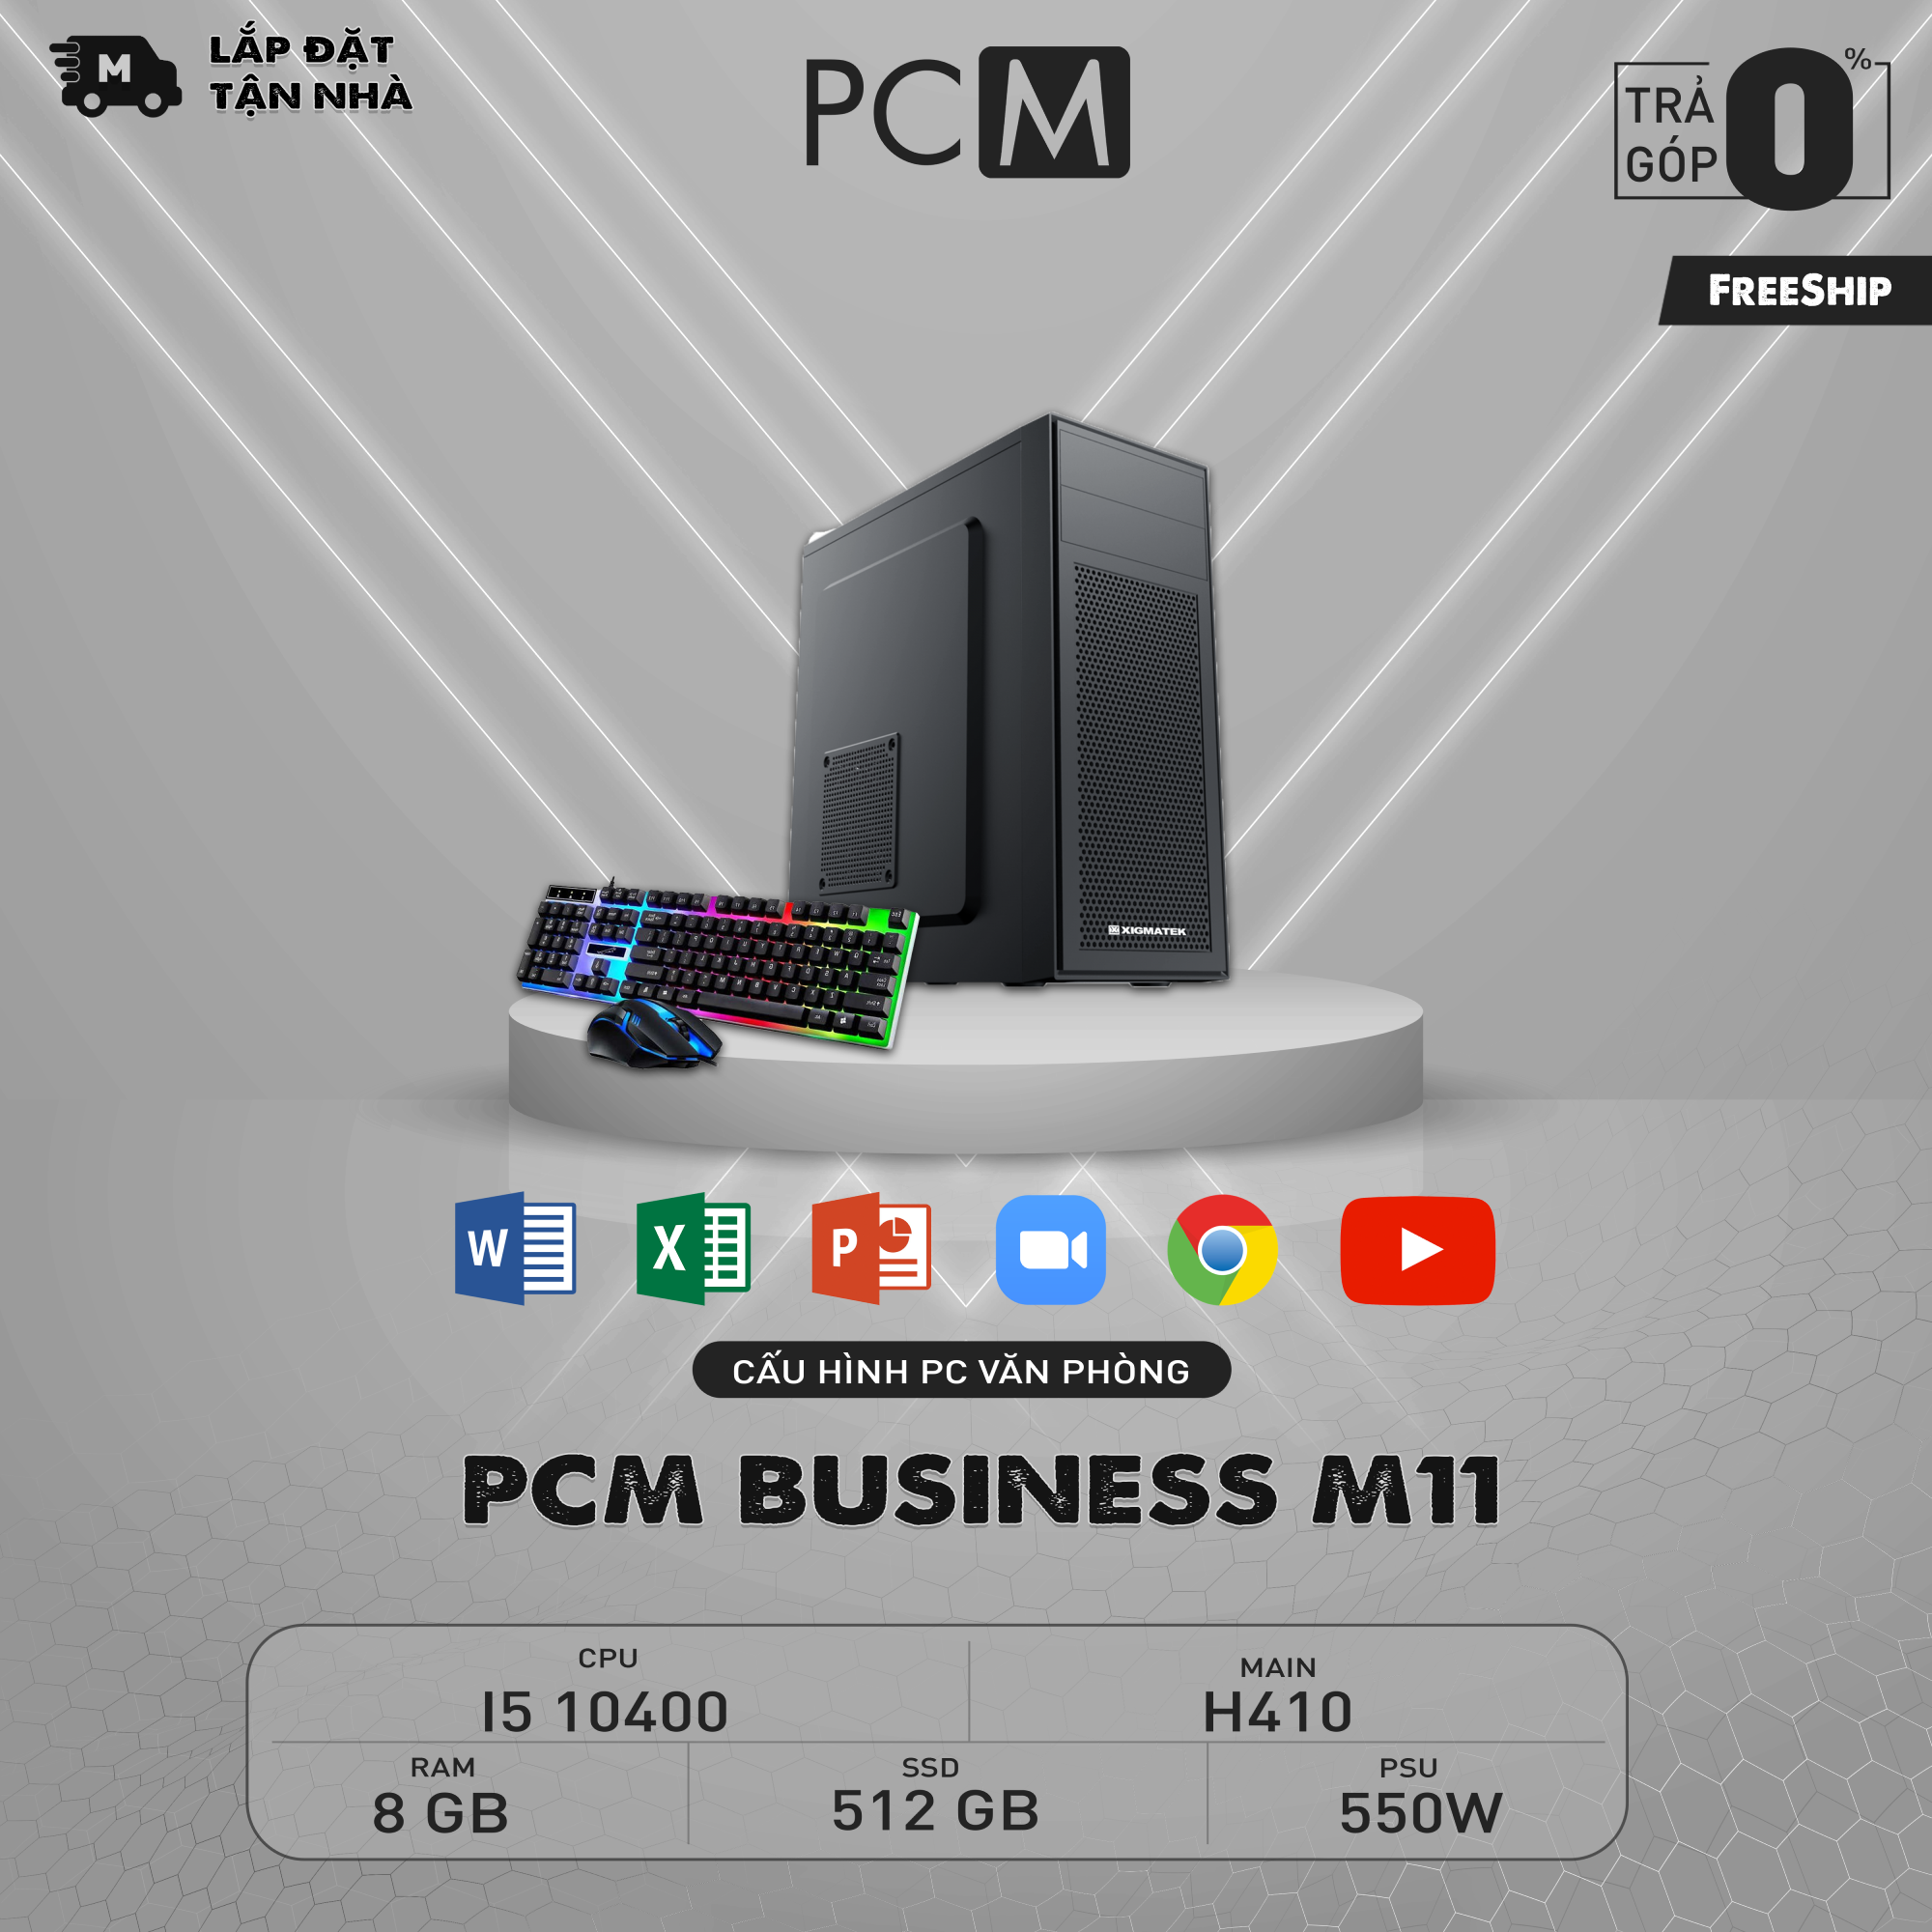 PCM BUSINESS M11 (I5 10400/8GB RAM/512GB SSD)